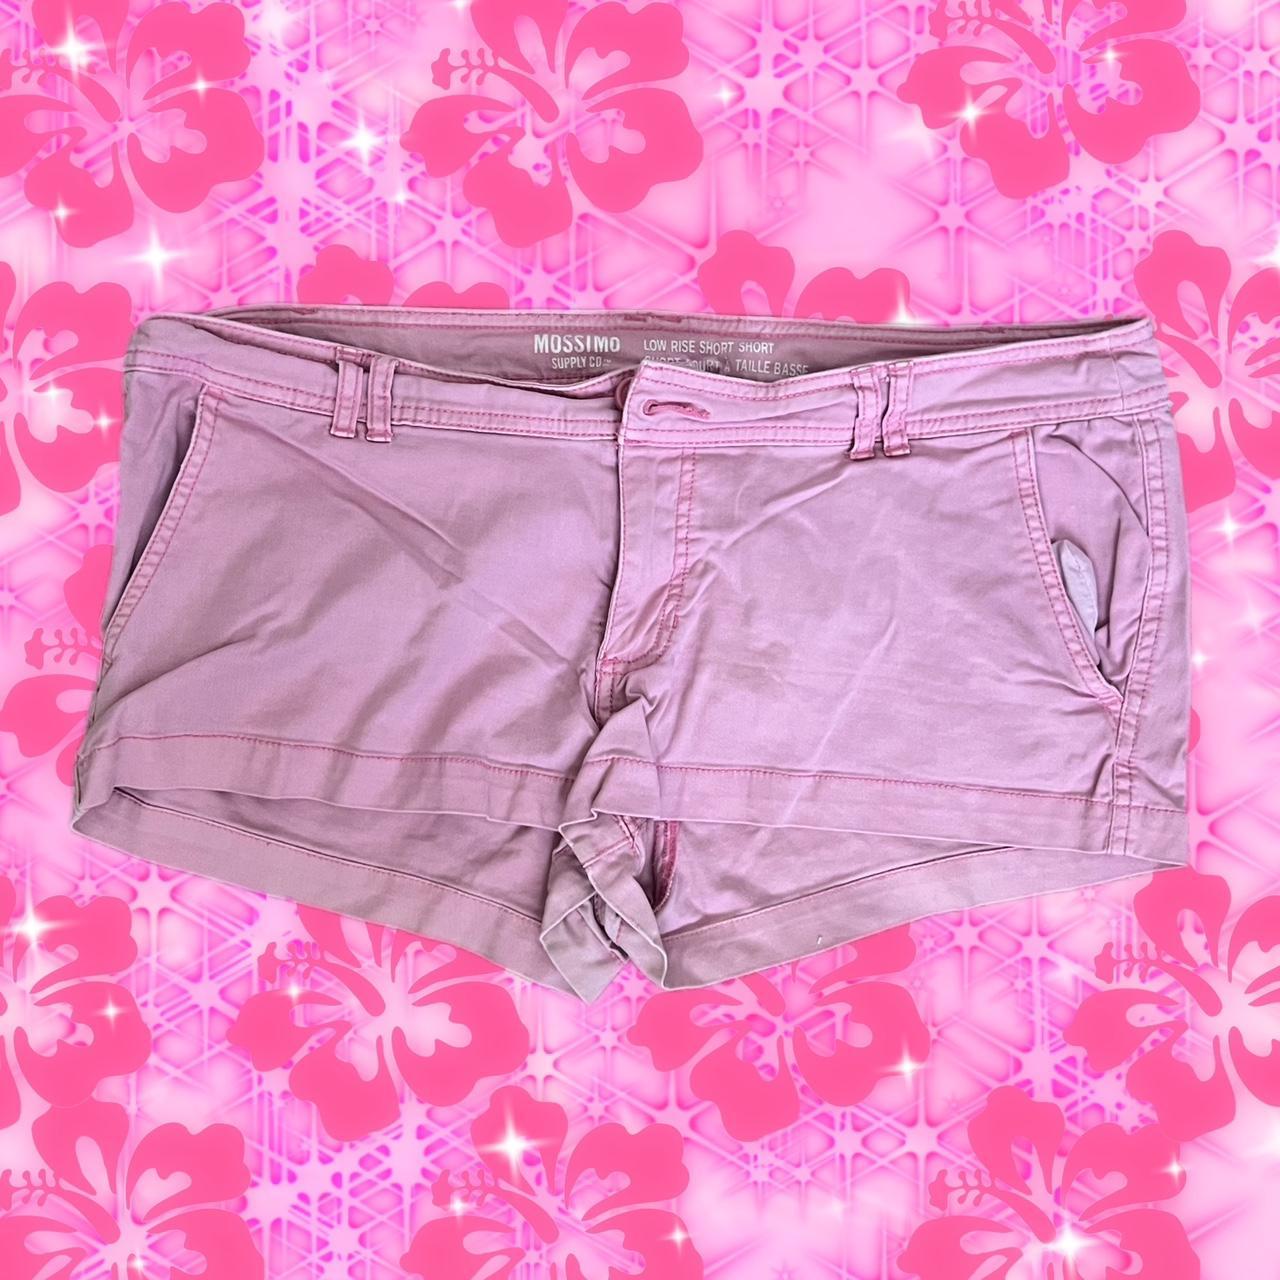 Mossimo Men's Pink Shorts | Depop